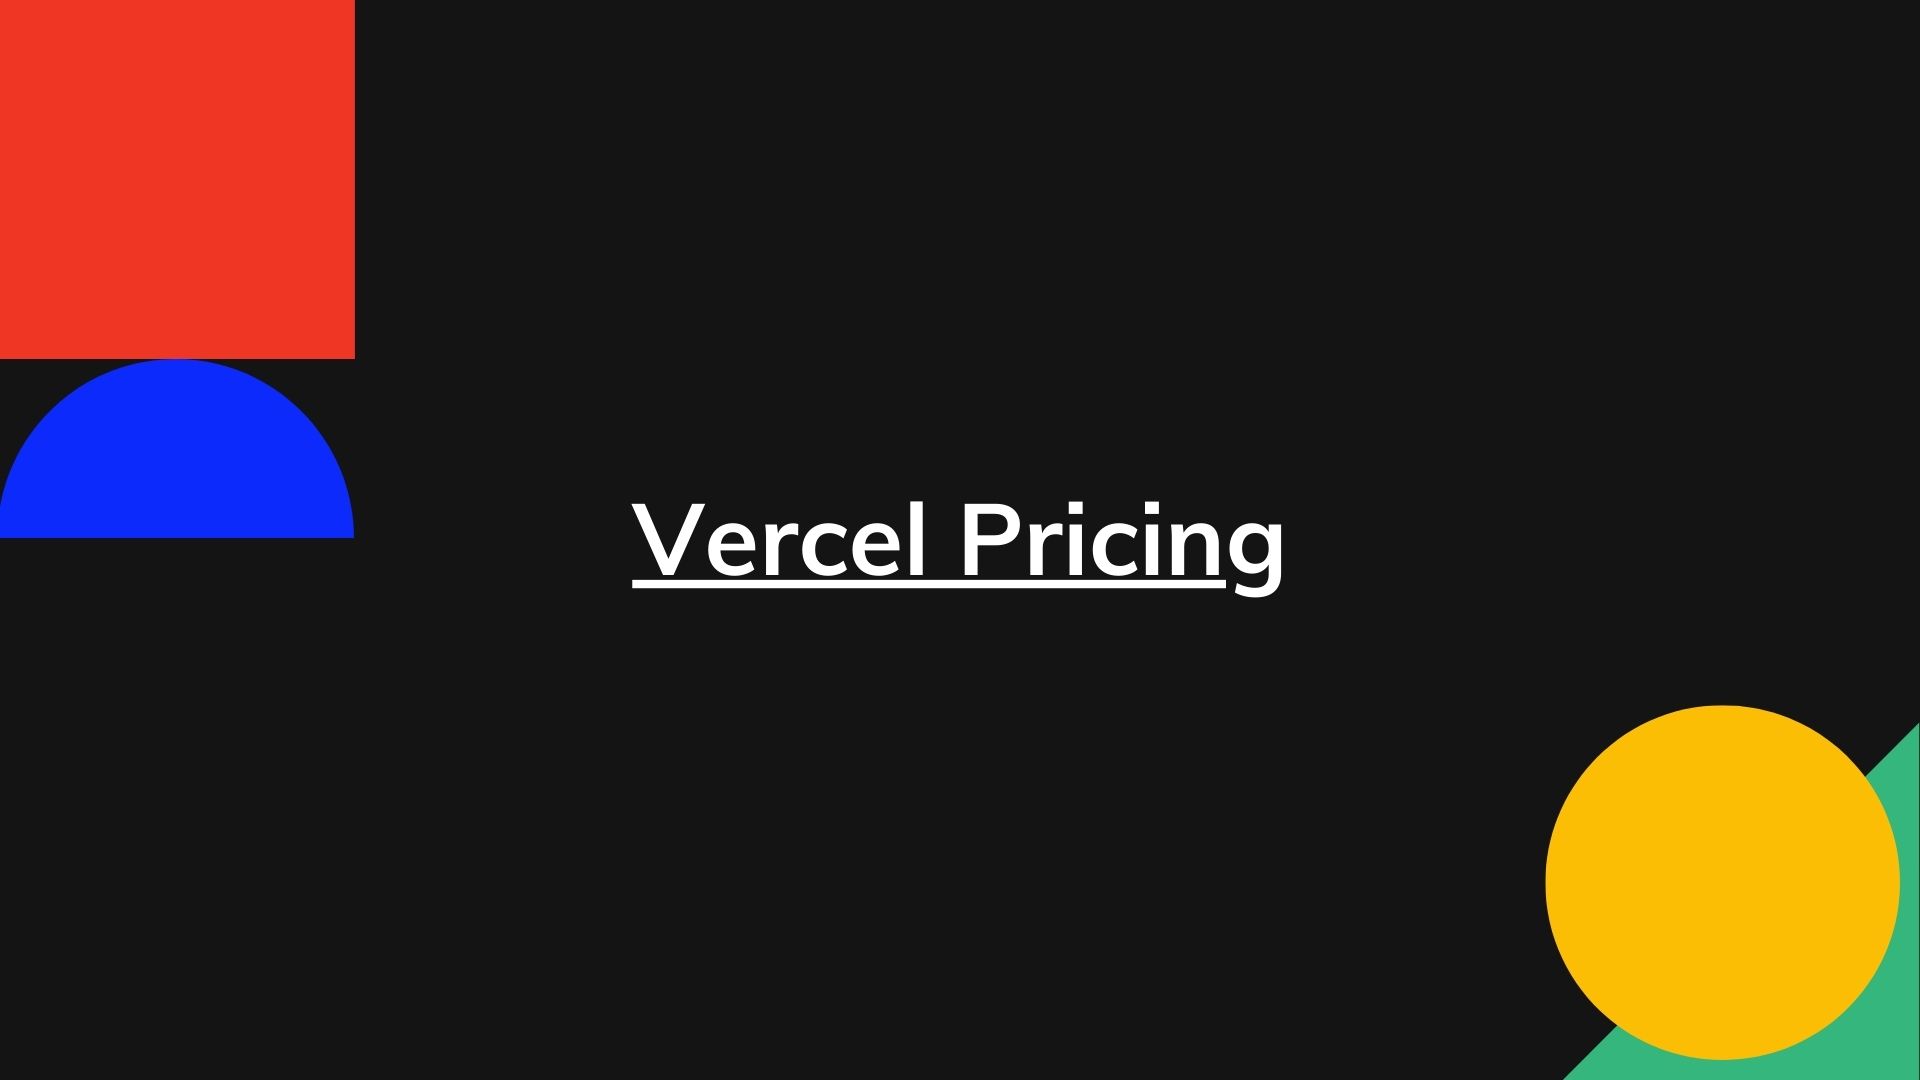 Vercel Pricing